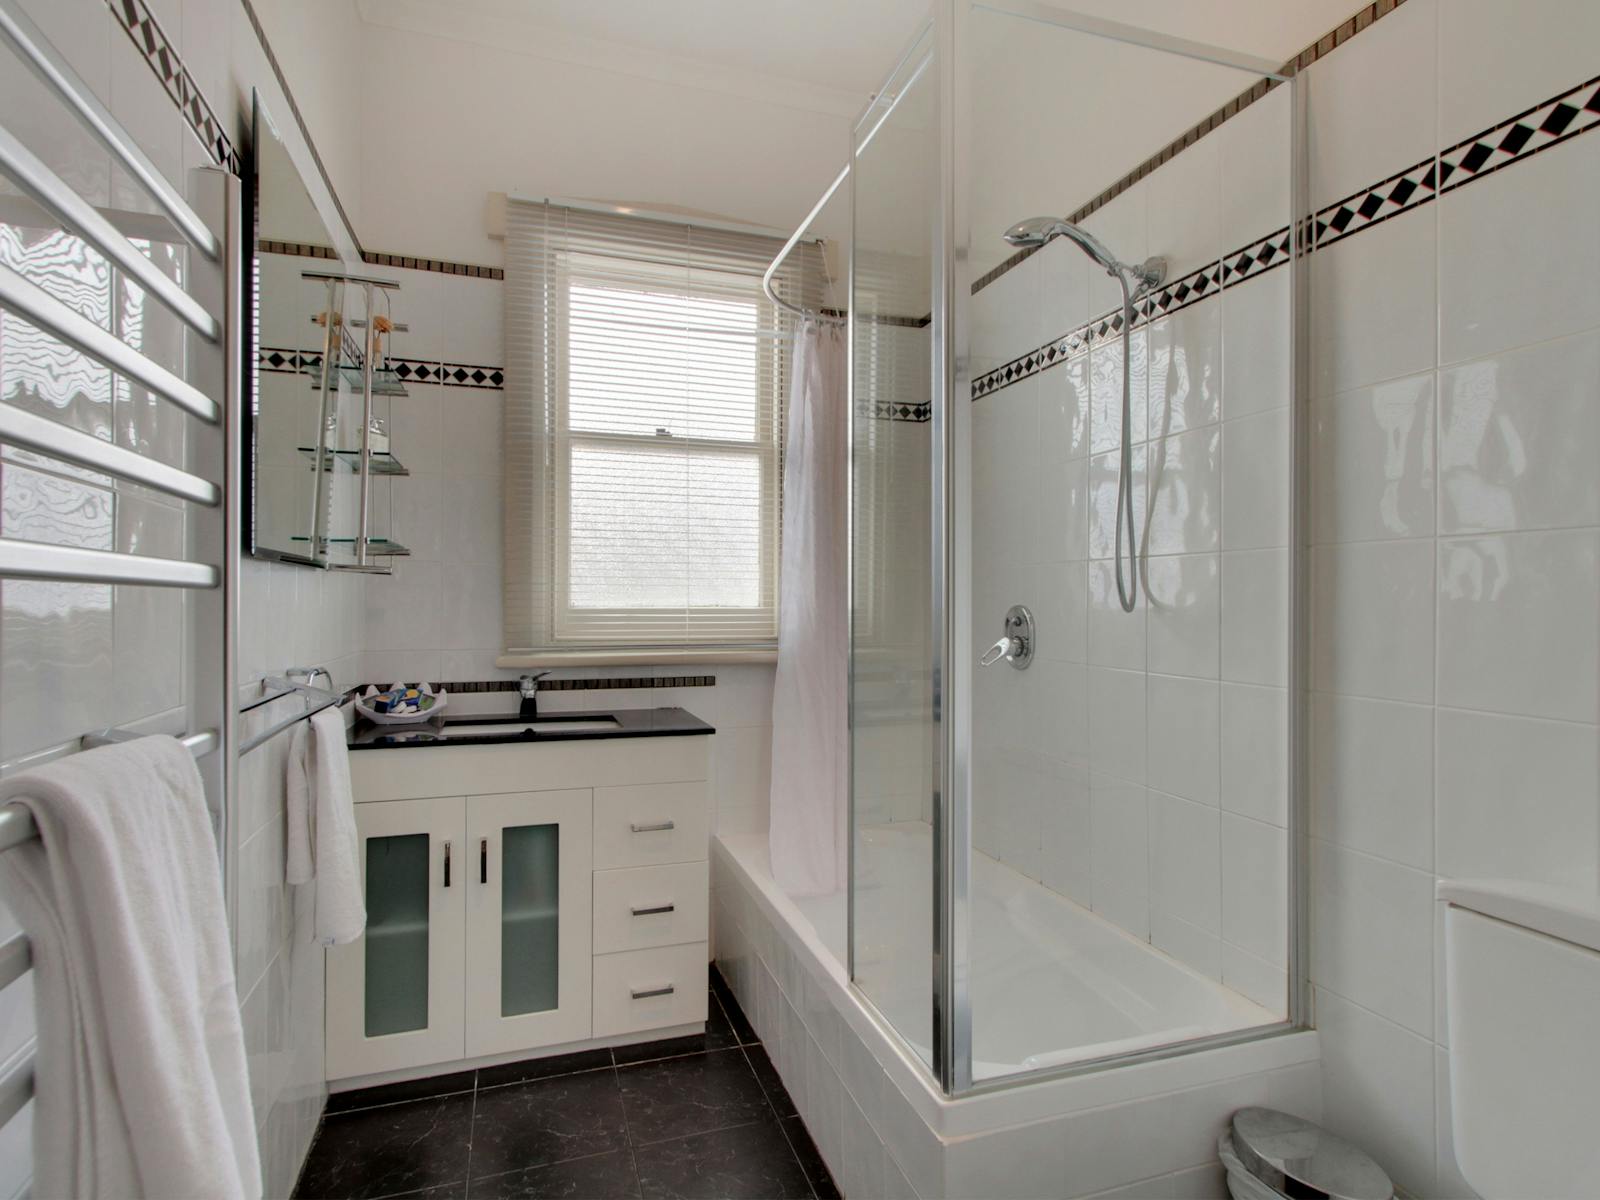 Bath, heated towel rail, hair dryer, toilet